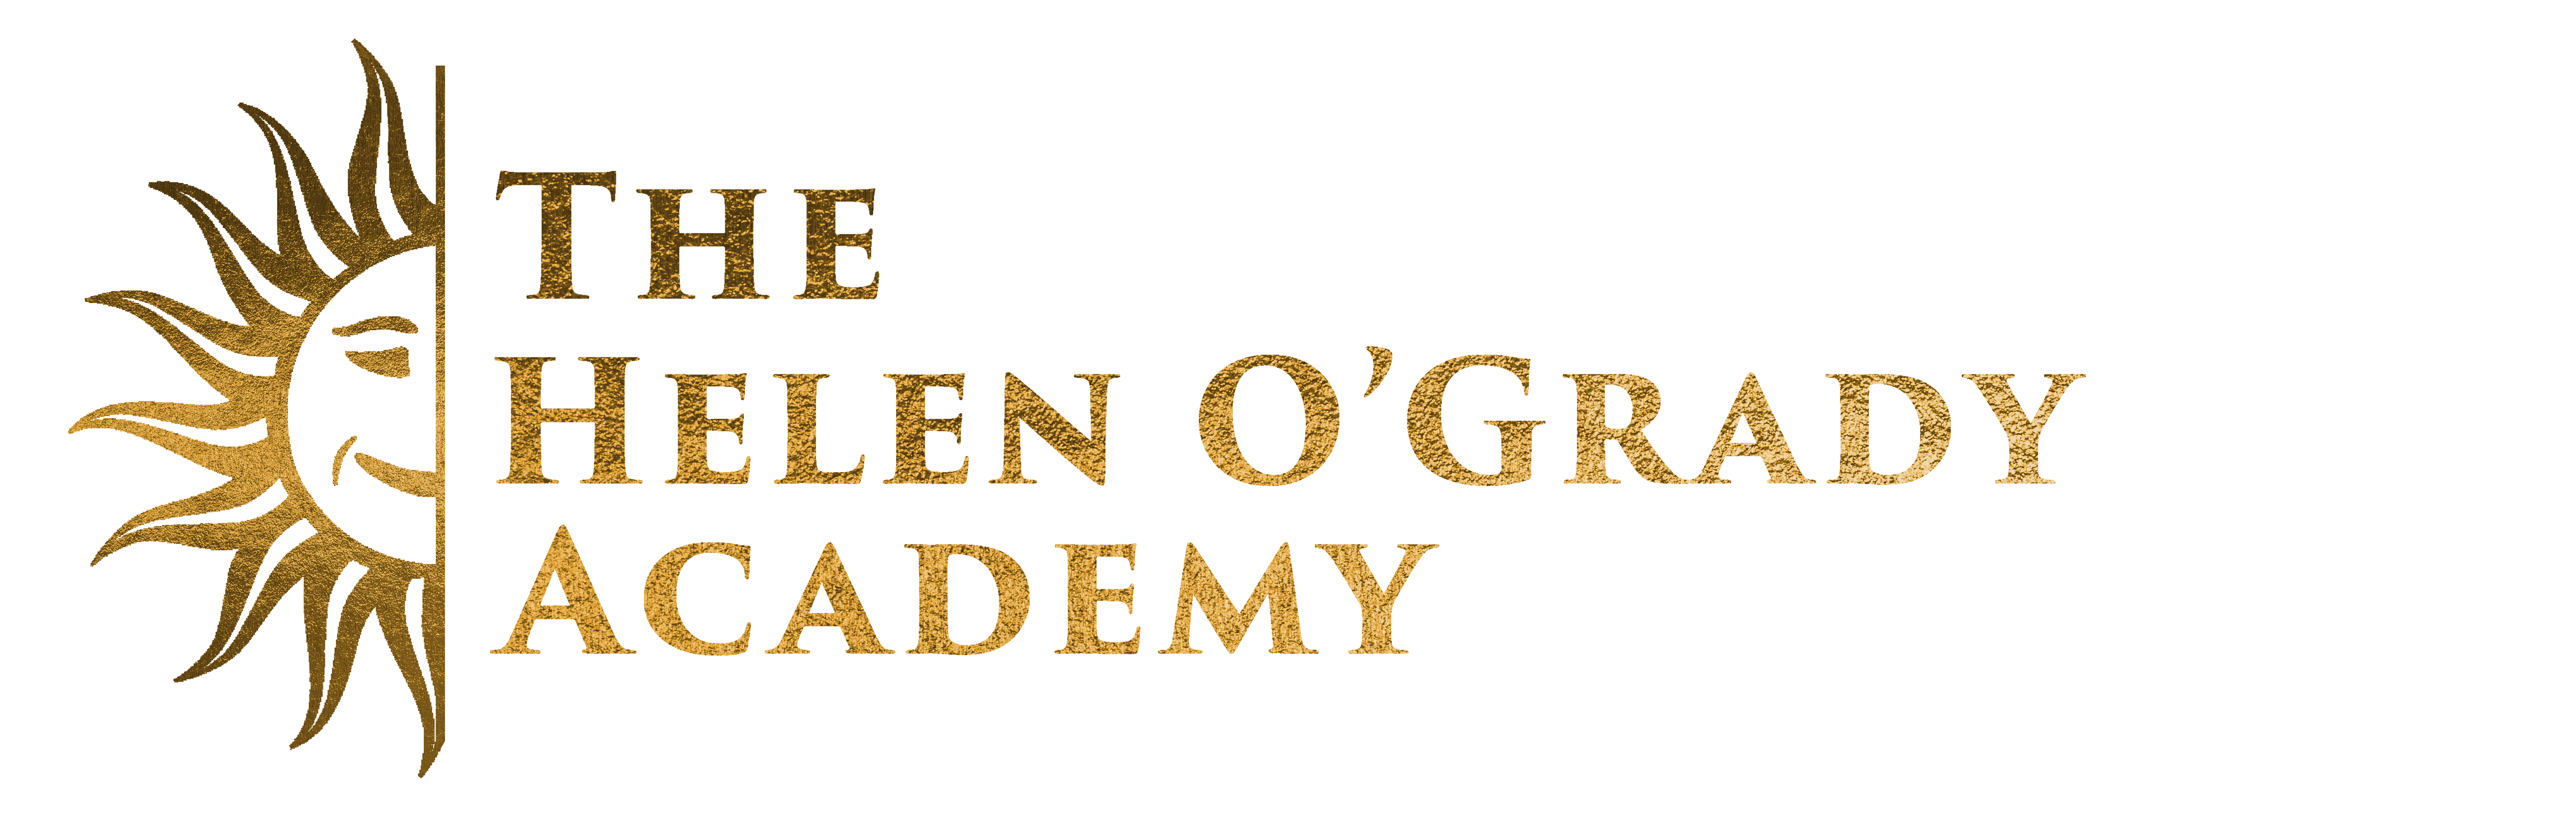 Helen O'Grady Academy